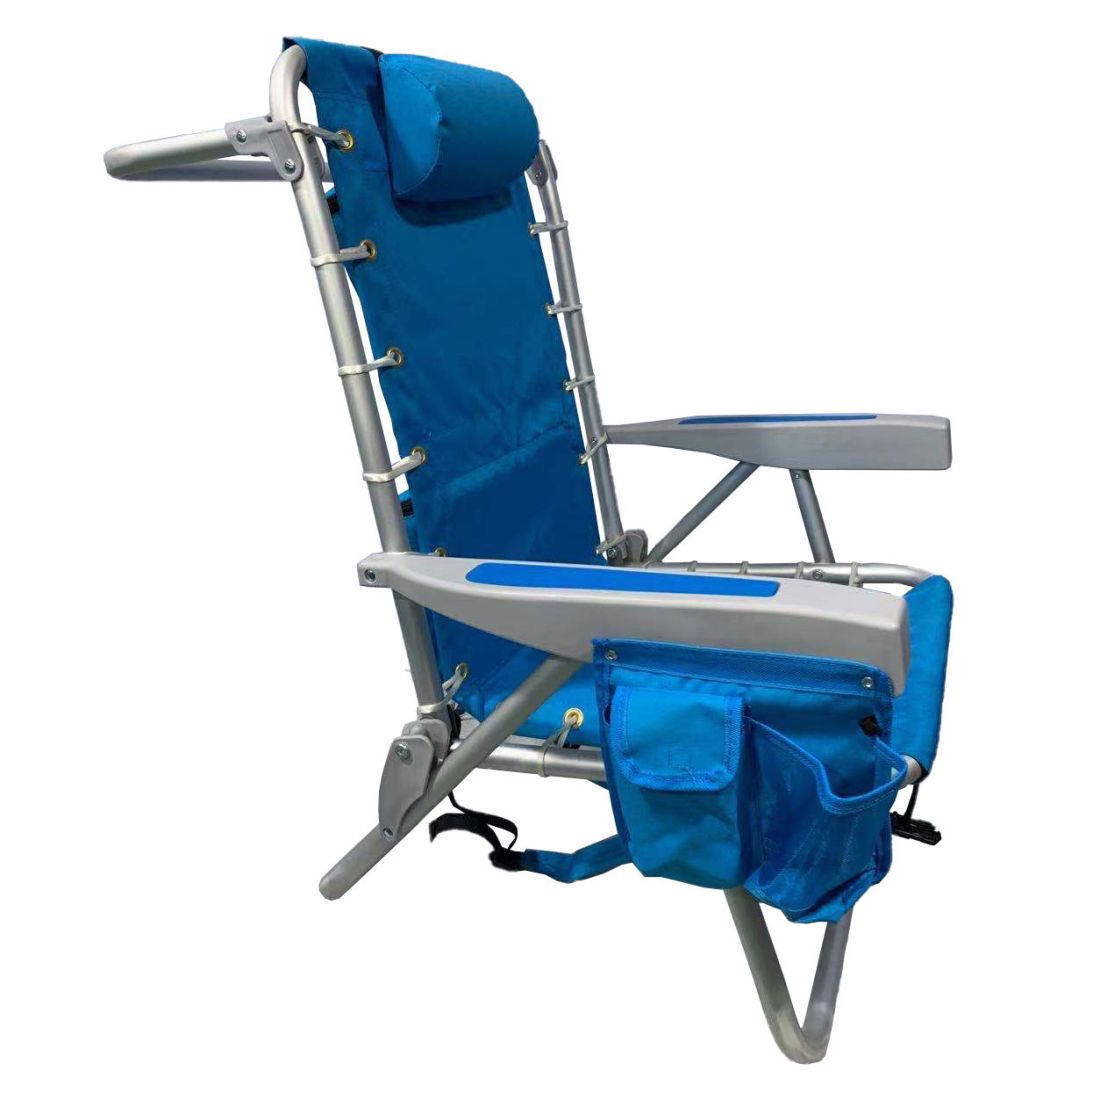 Creatice Genuine Beach Bum Chair for Small Space